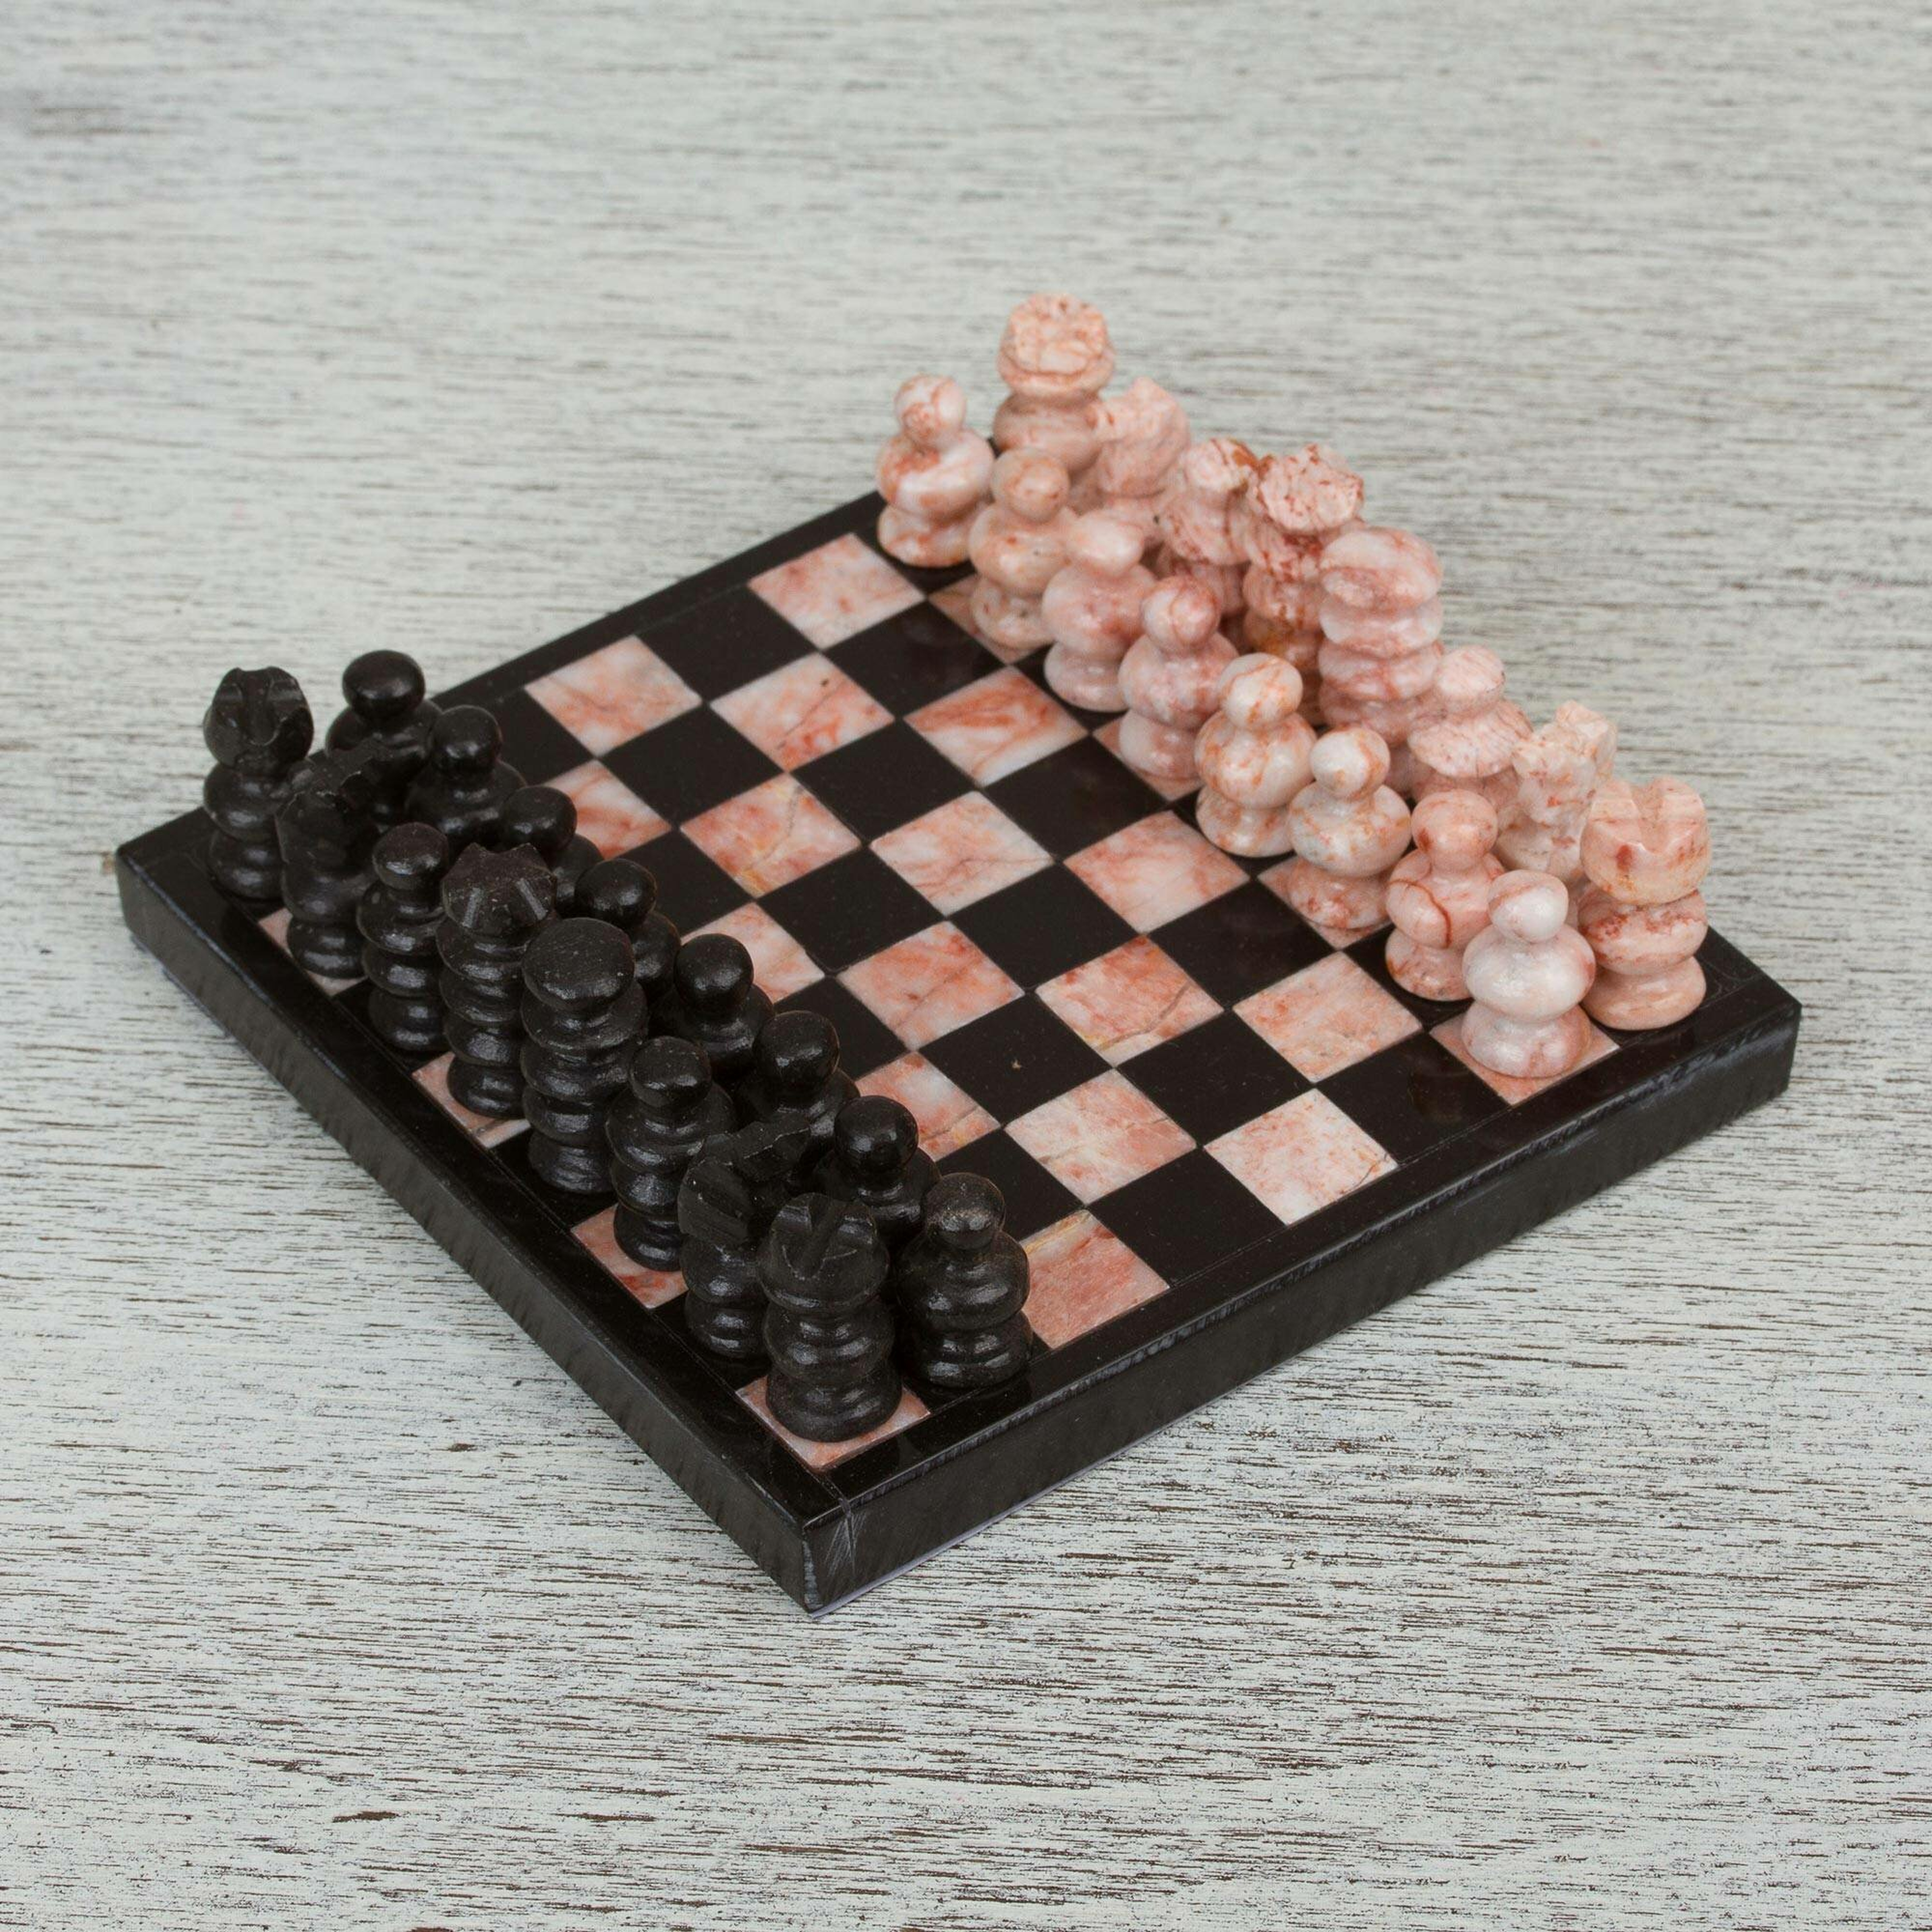 Handmade Tia Black Chess Board Game - Wayfair